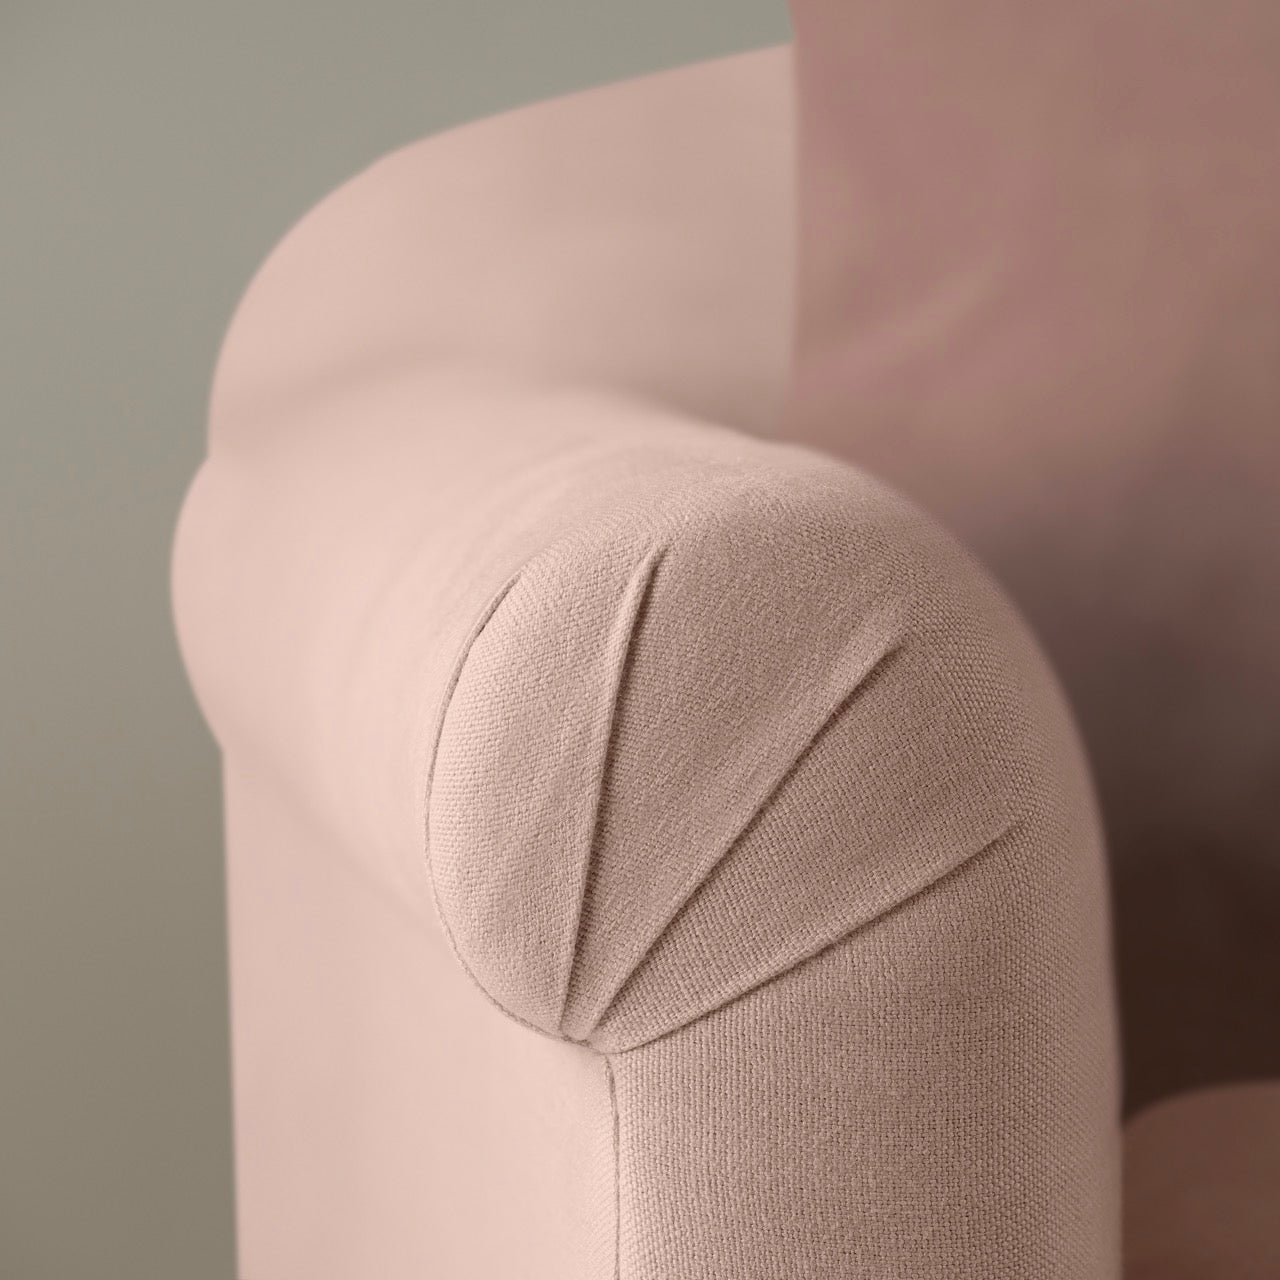 Dolittle 2 Seater Sofa in Laidback Linen Dusky Pink - Nicola Harding